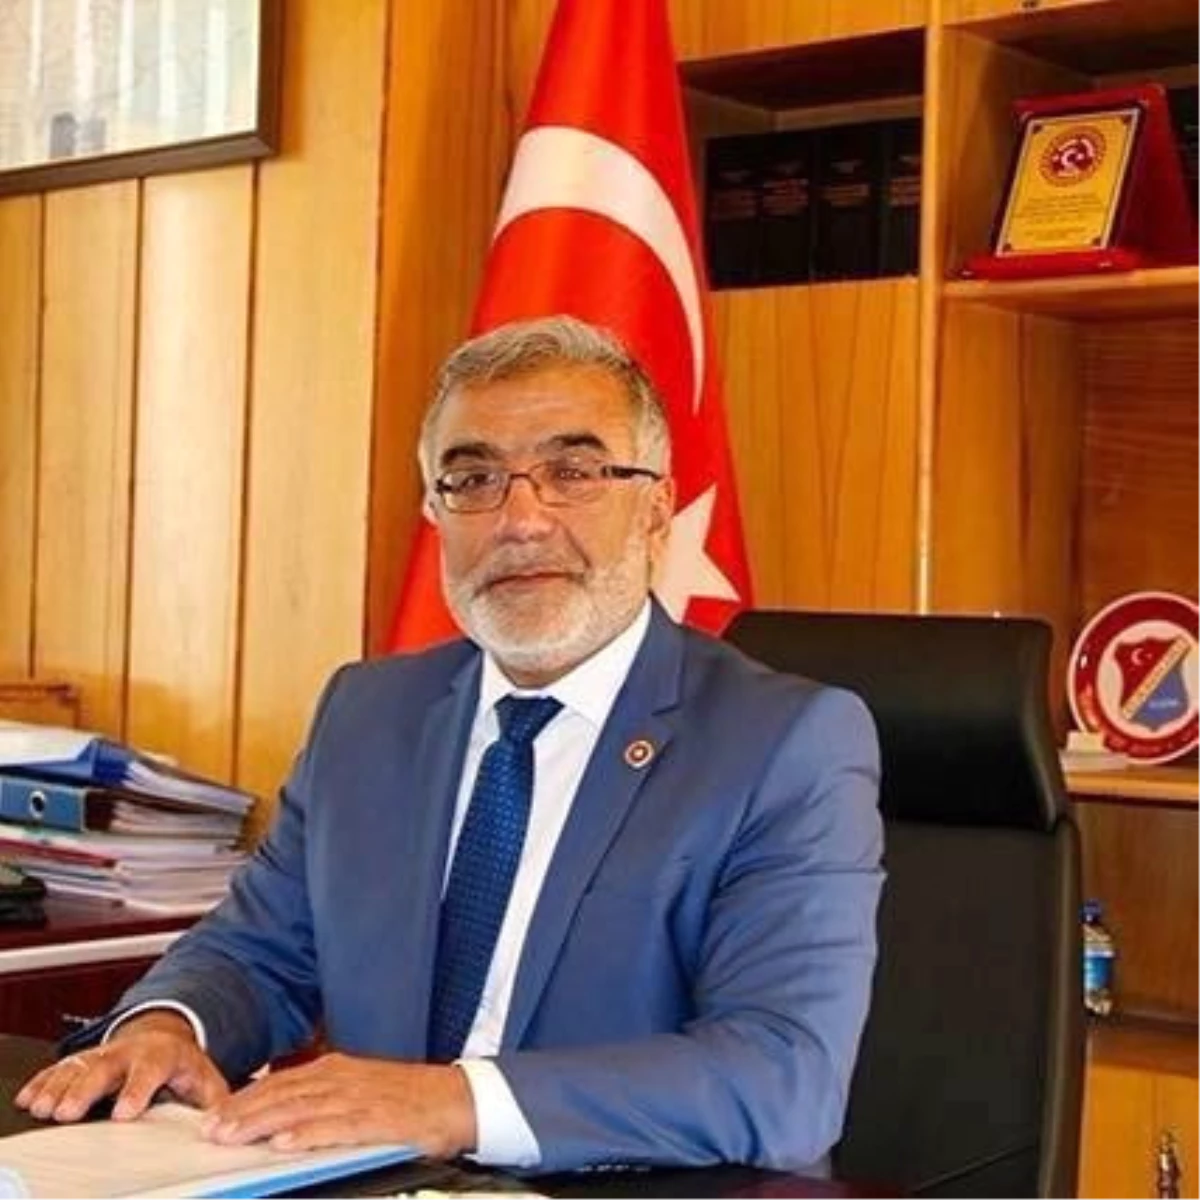 AK Partili İl Genel Meclisi Başkanı FETÖ\'den Gözaltına Alındı